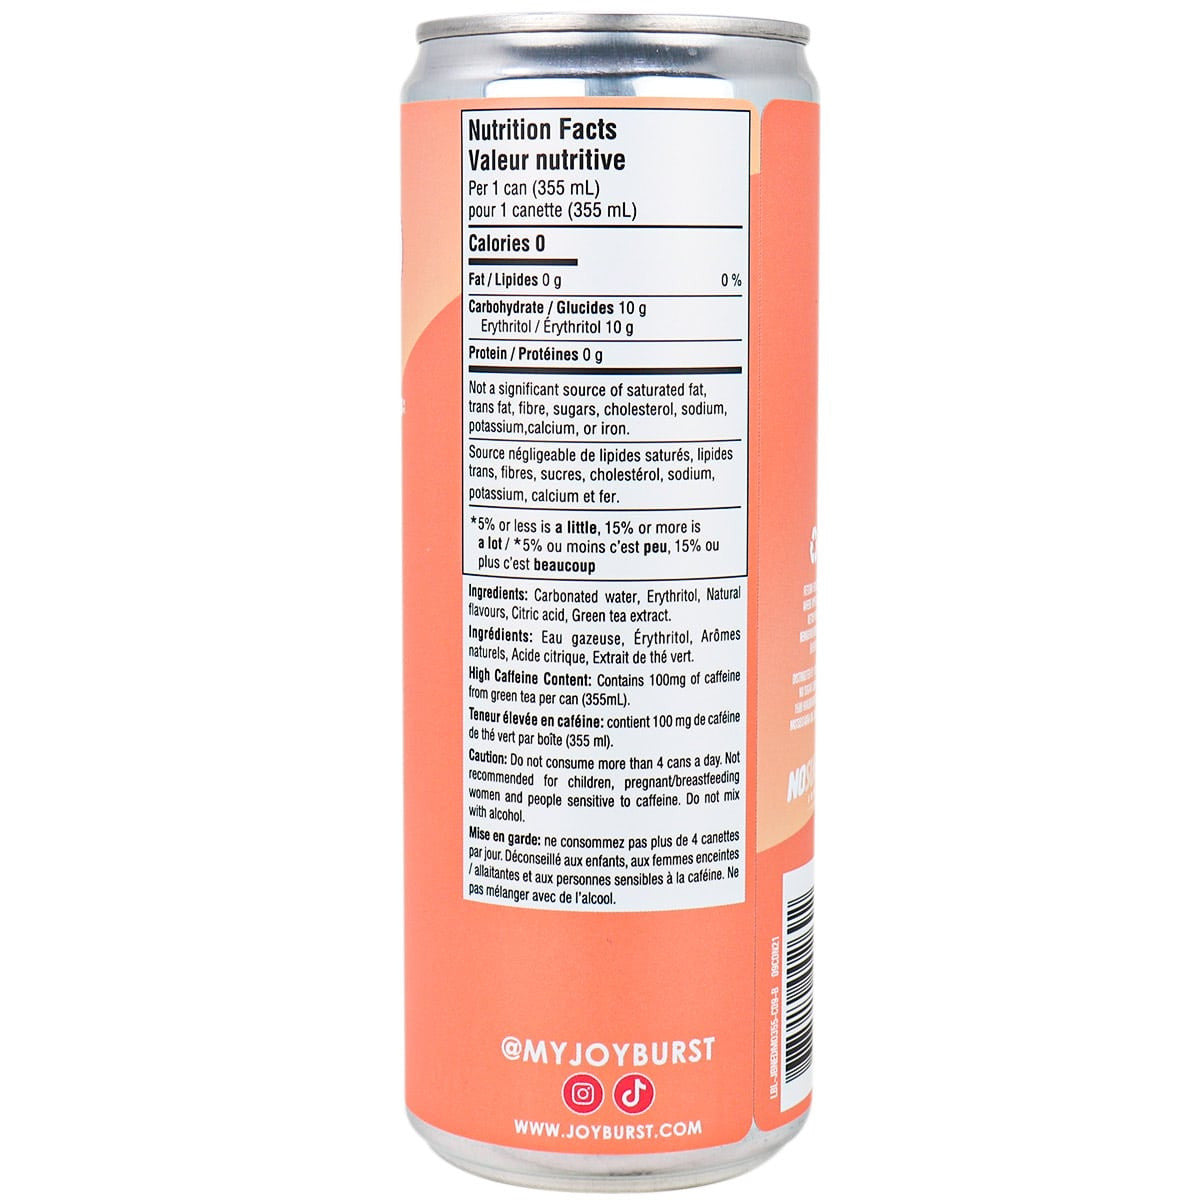 NoSugar Company Joyburst Energy Drink, Peach Mango Flavor, 355mL/12.4 oz. Can {Imported from Canada}